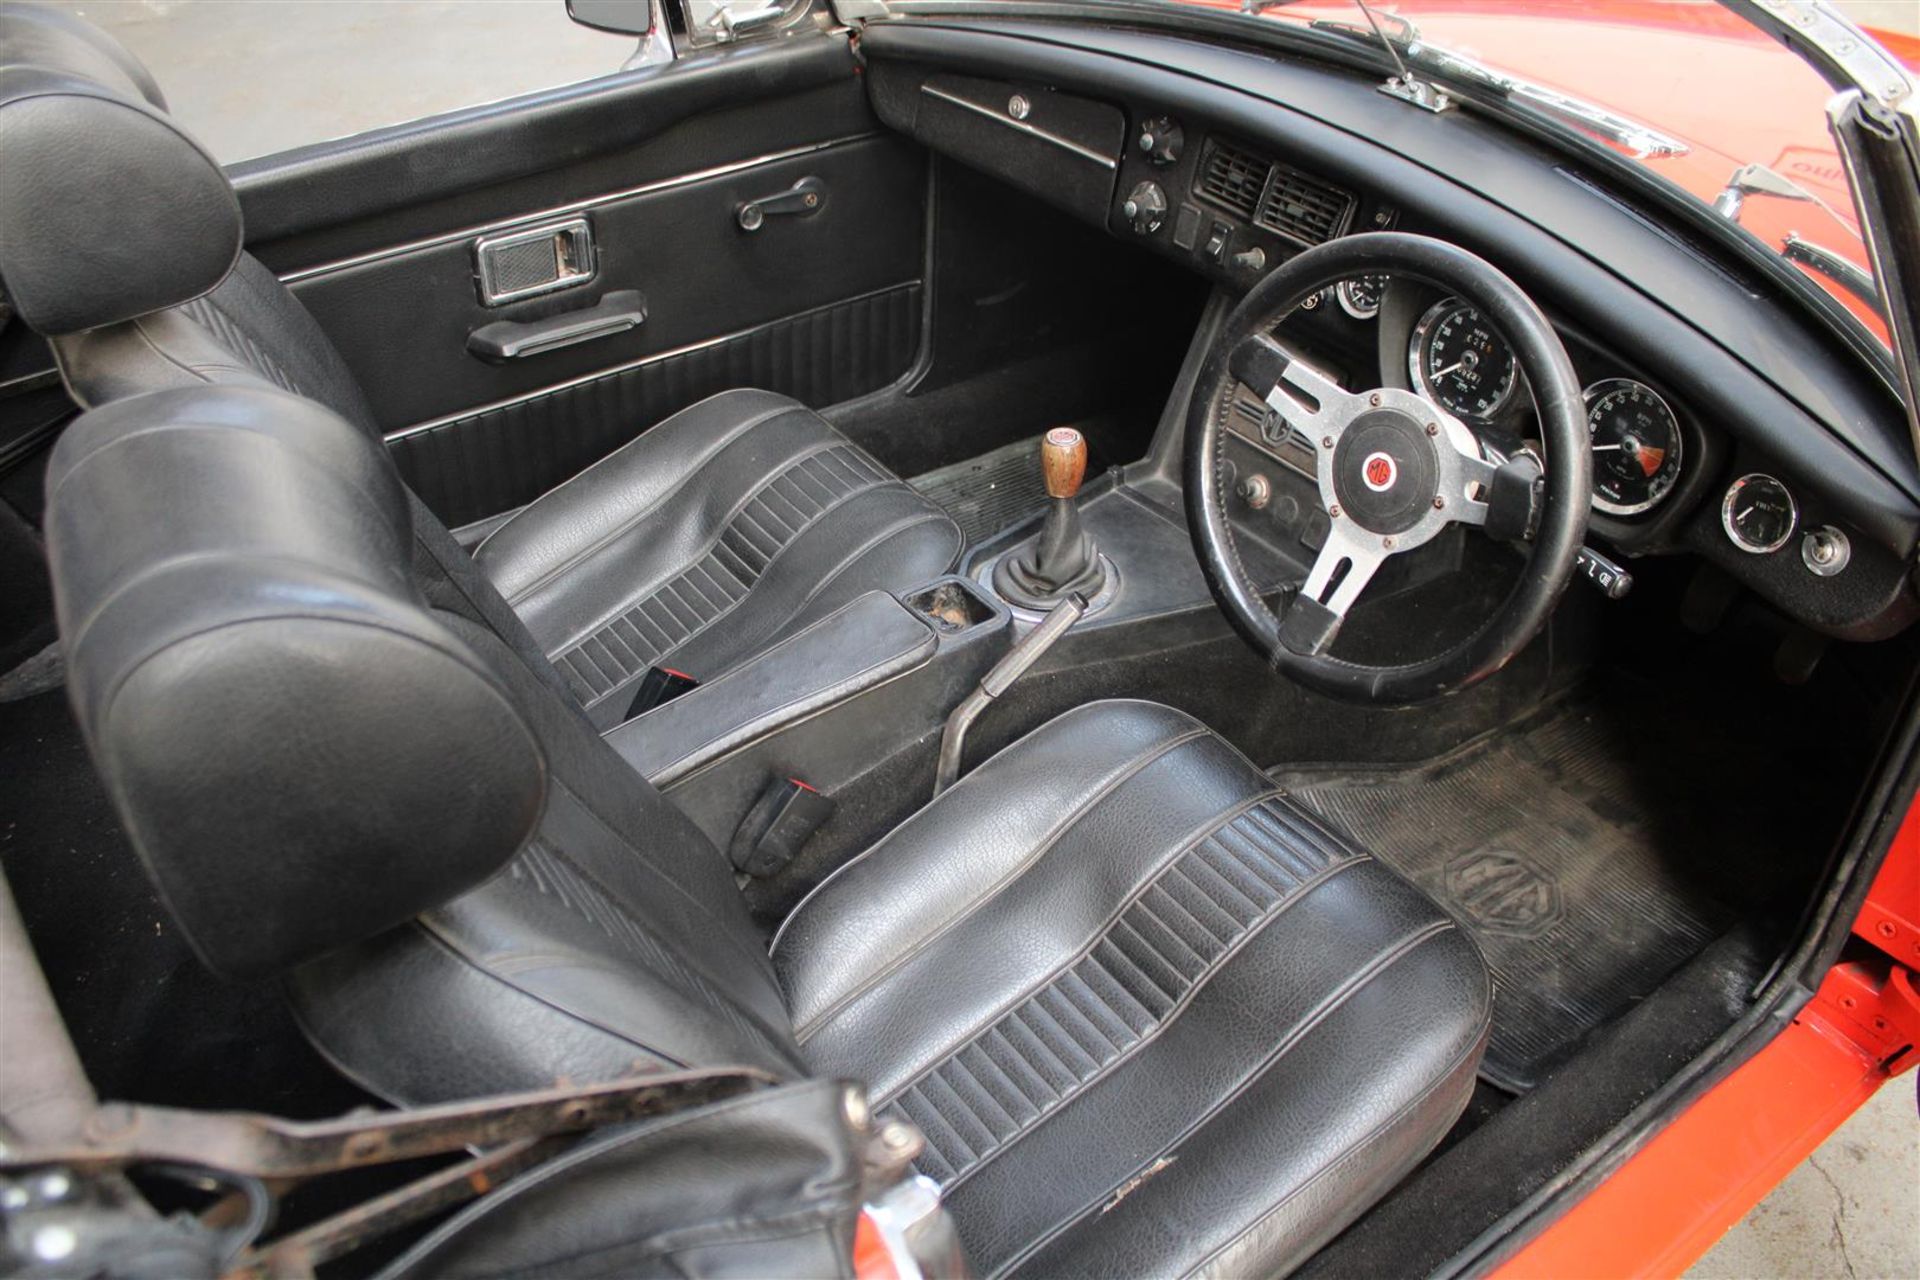 1975 MG B Roadster - Image 9 of 24